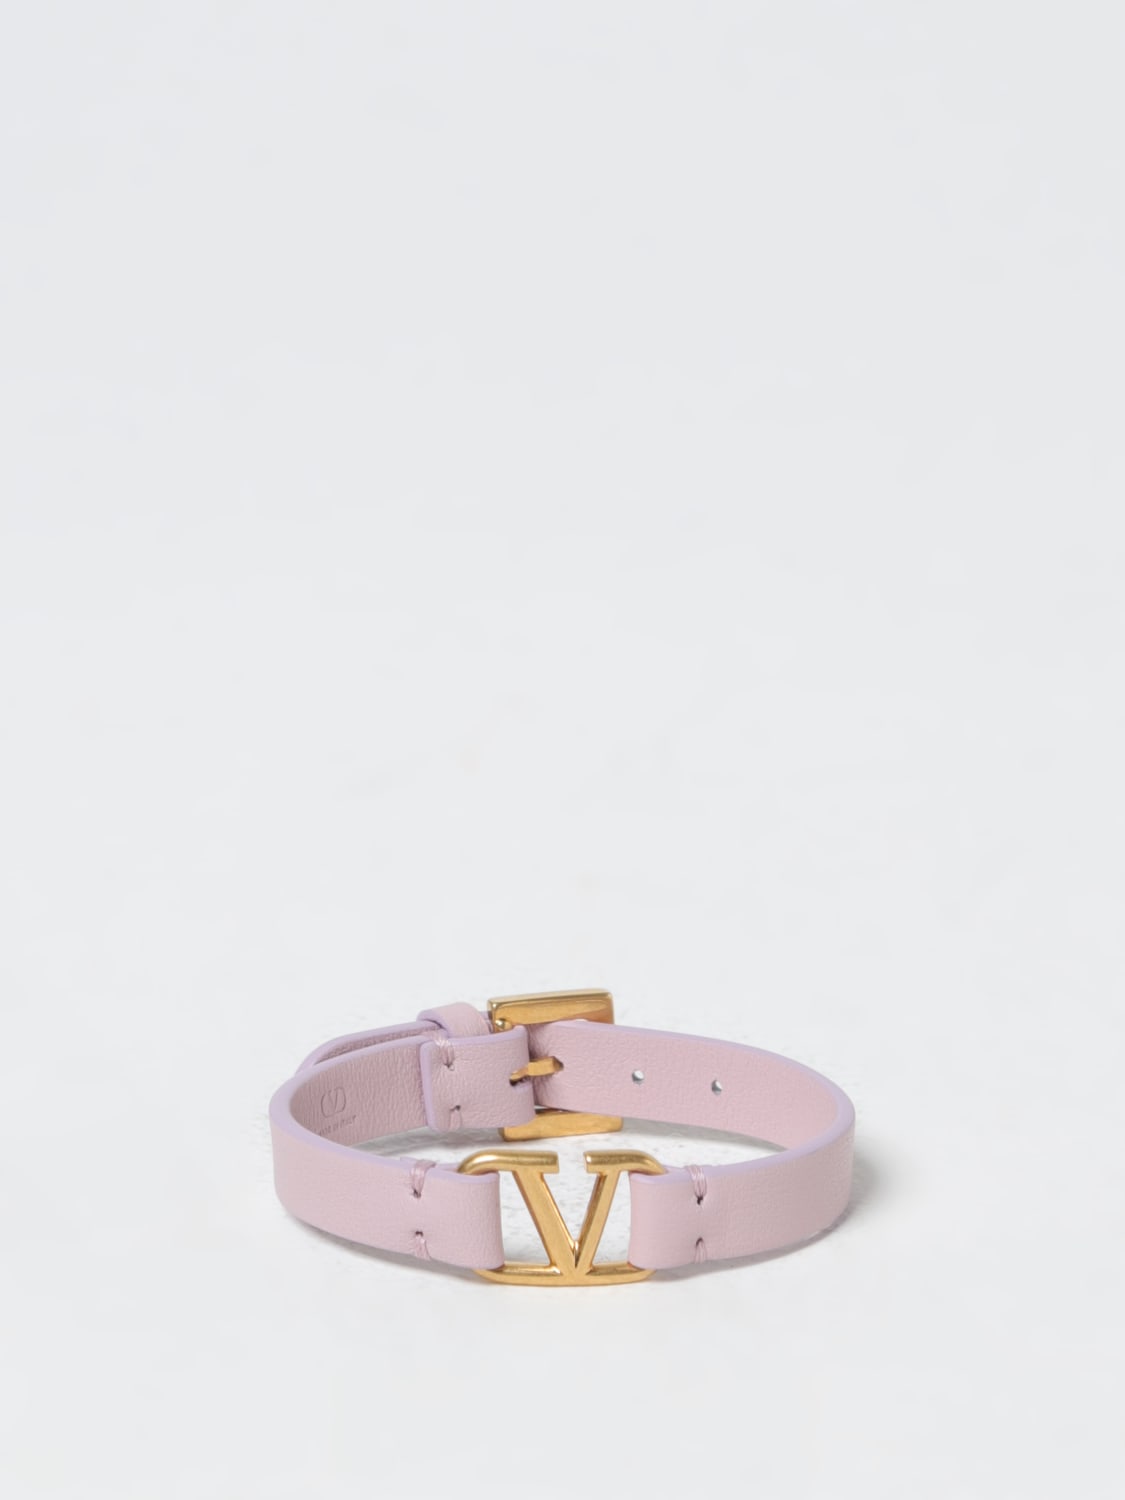 VLogo Signature leather bracelet, Valentino Garavani